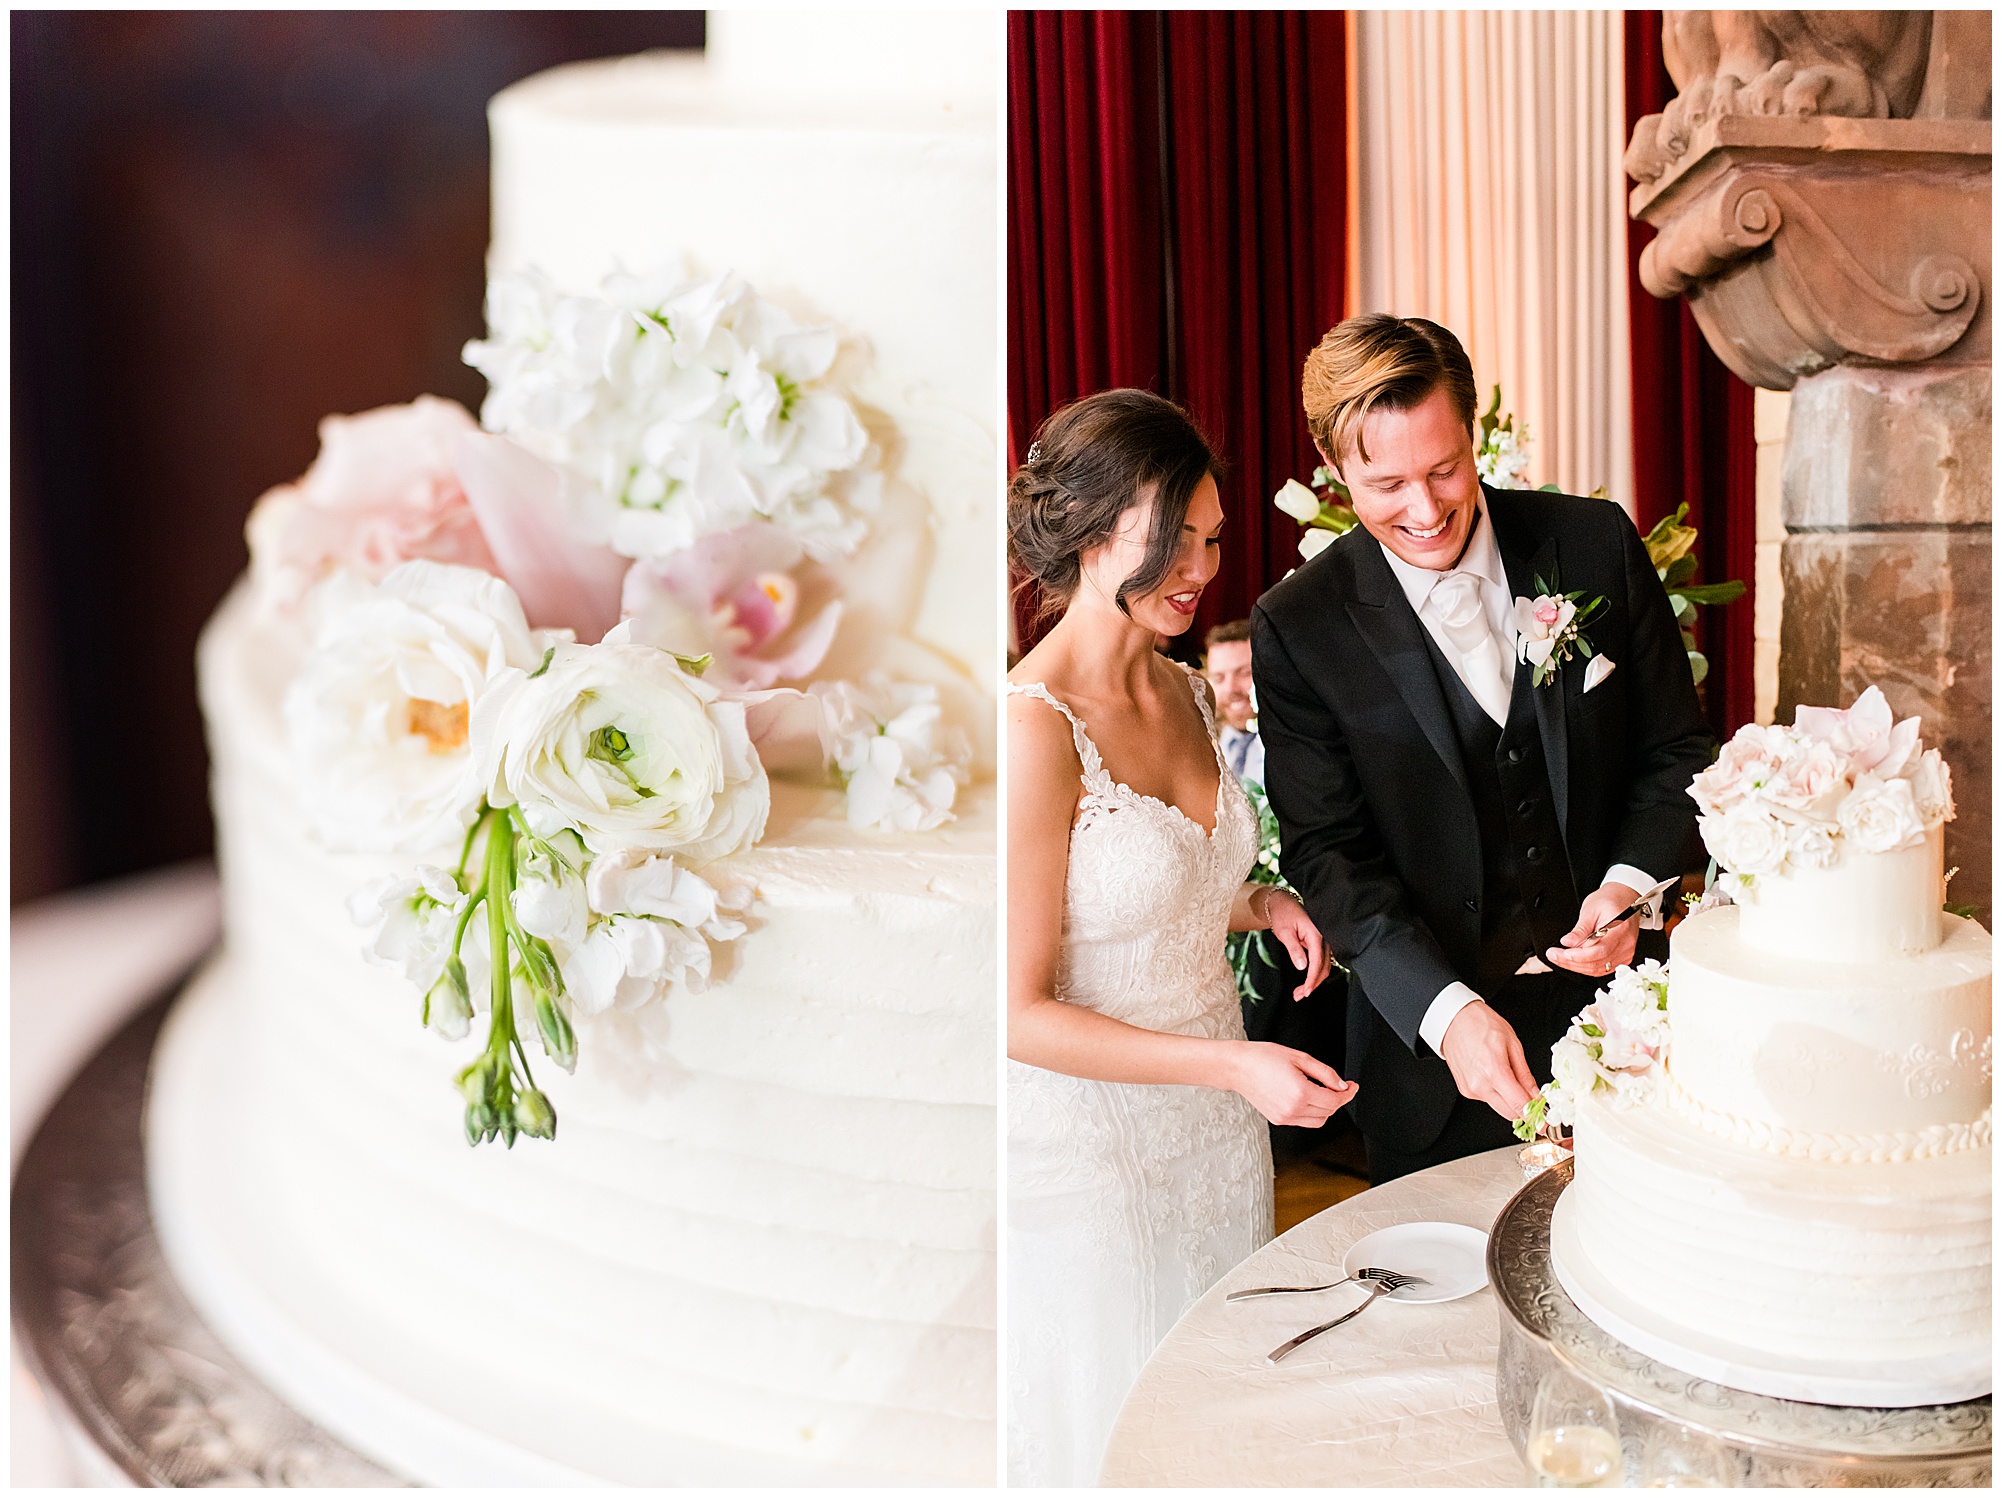 cake cutting. by rva wedding photographer, sarah & dave photography.